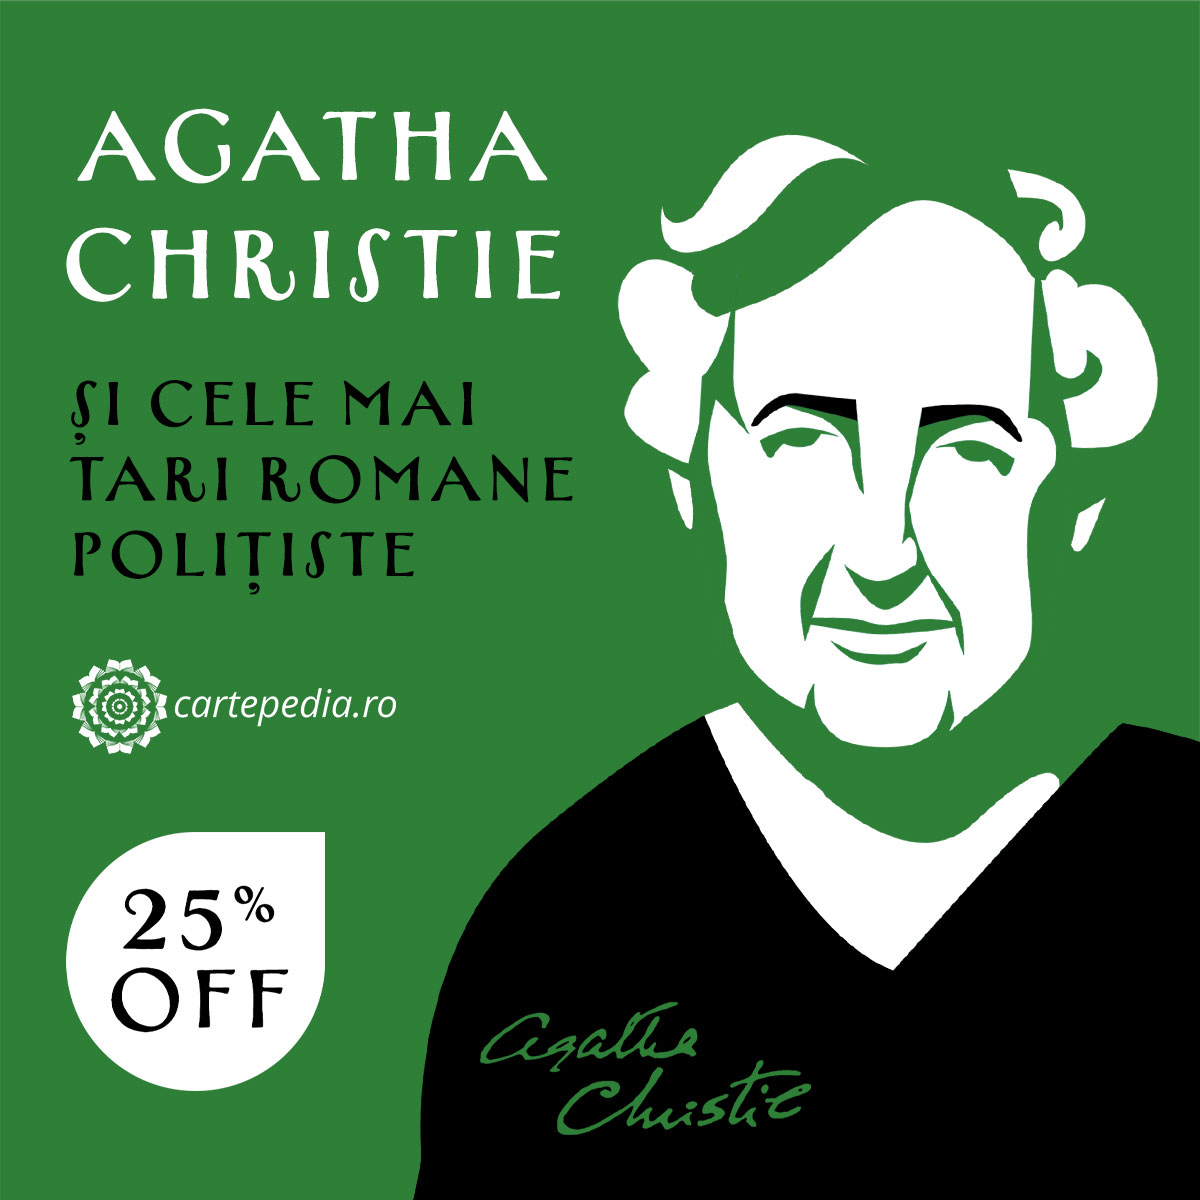 Agatha Christie și cele mai tari romane polițiste